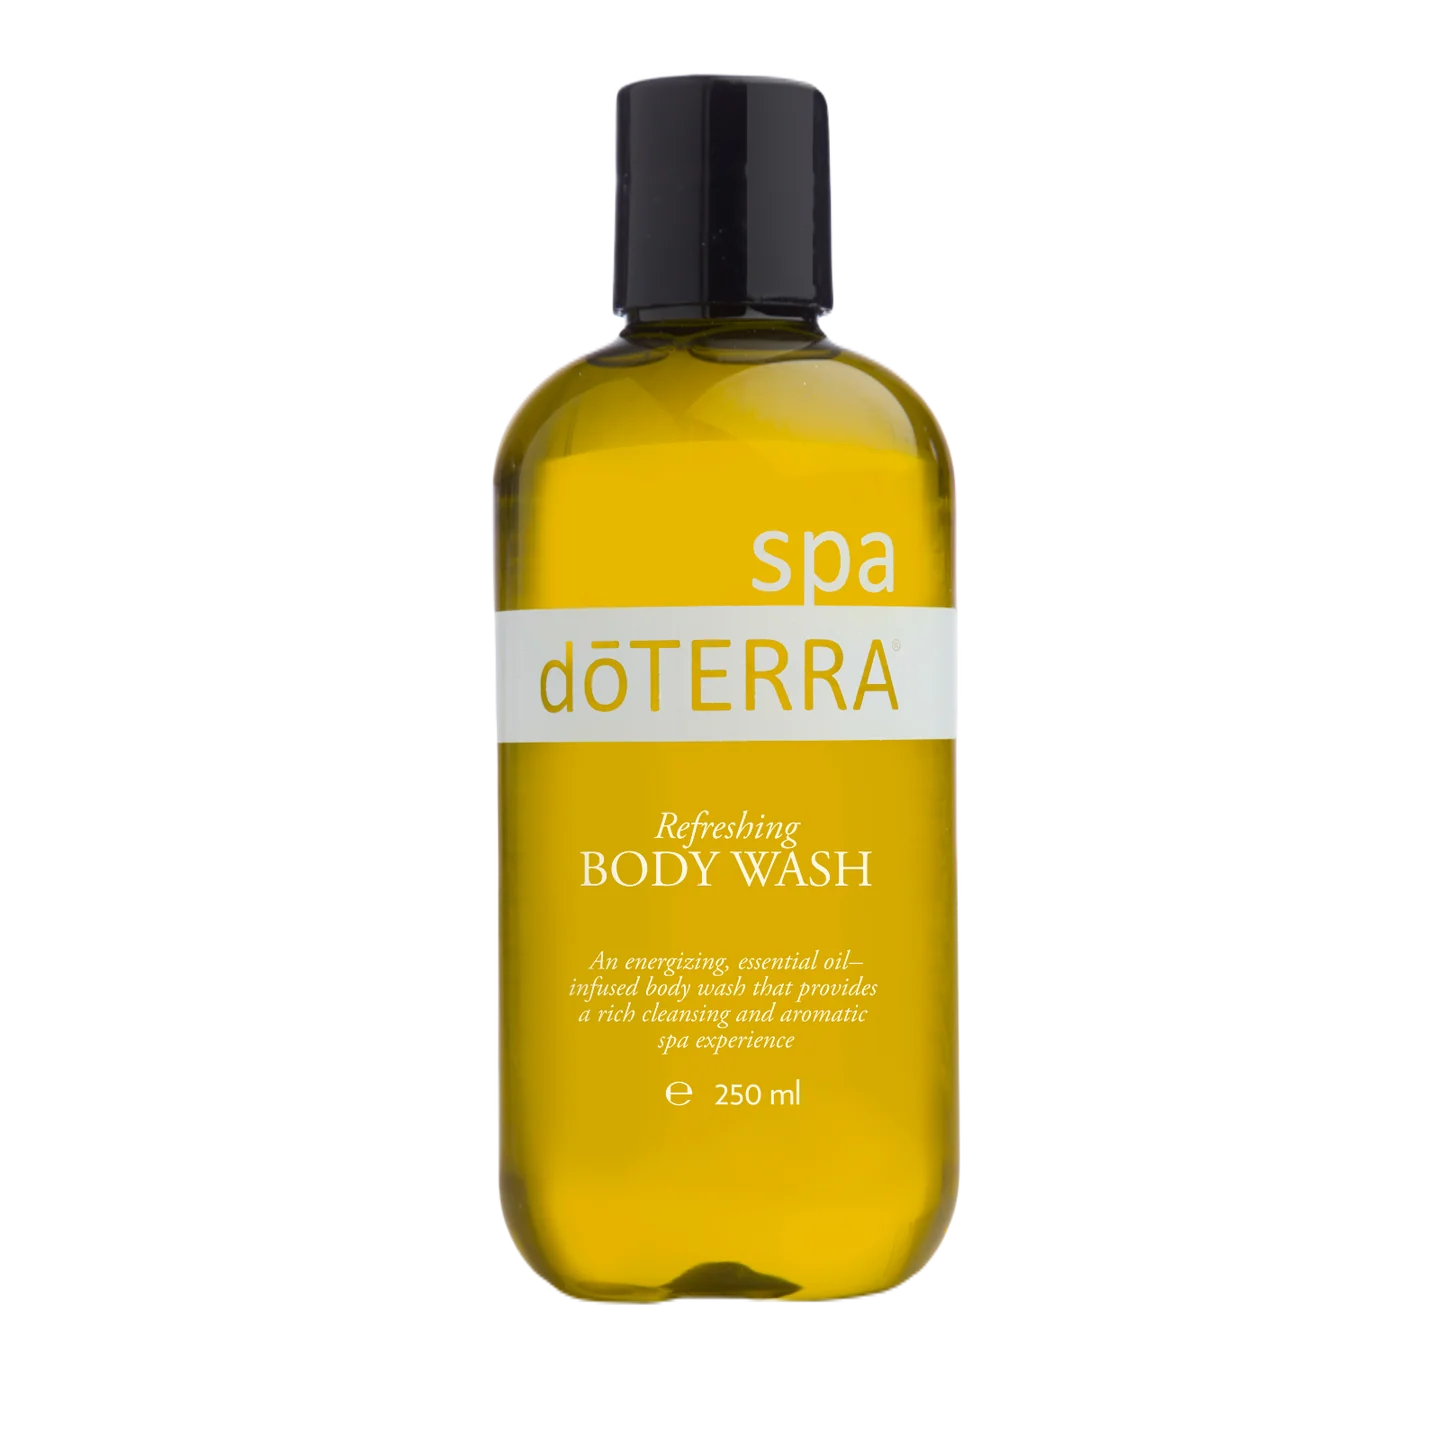 dōTERRA SPA Refreshing Body Wash